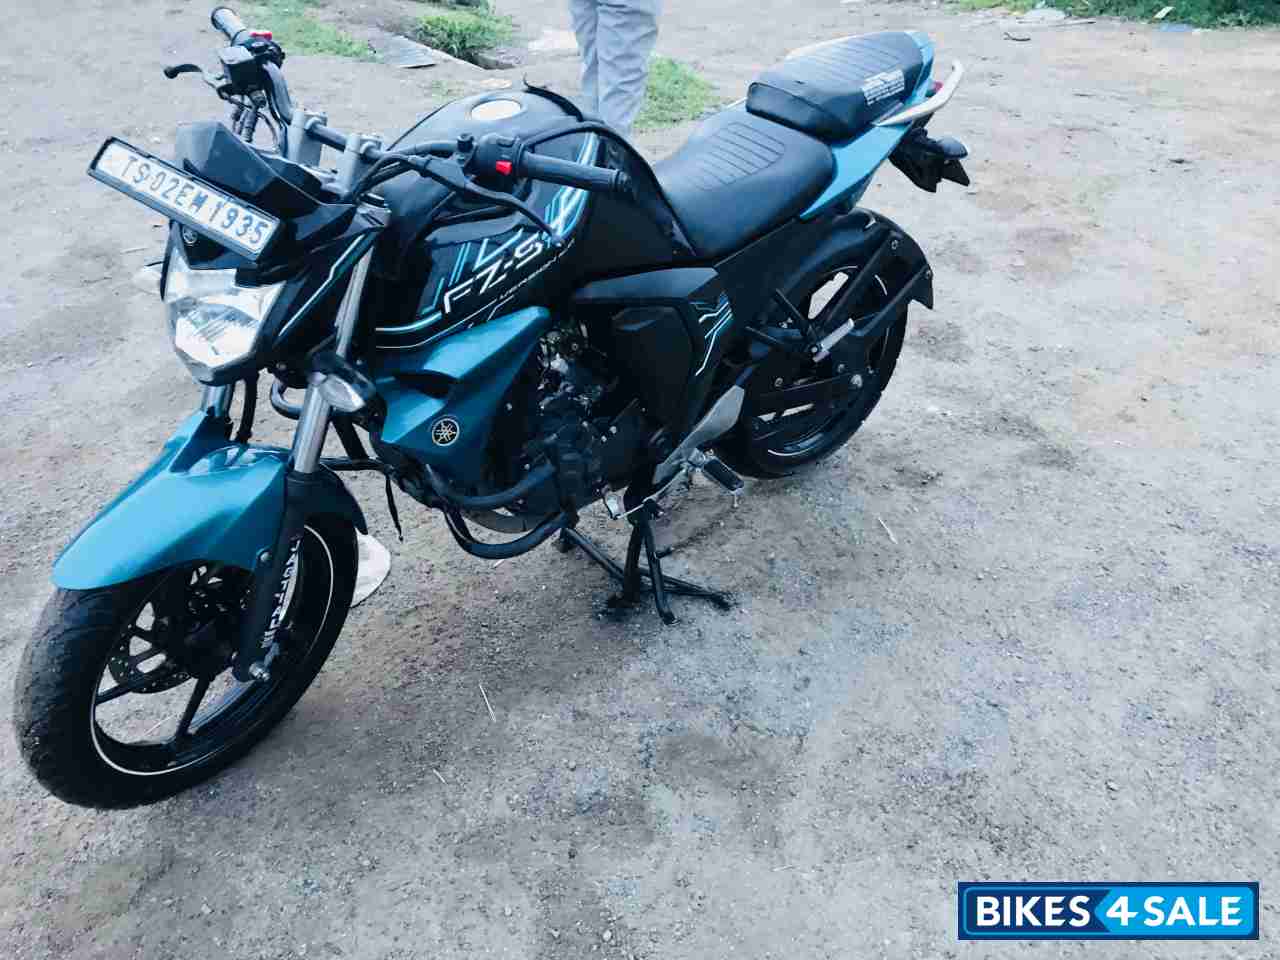 Yamaha Fz S Bike Price